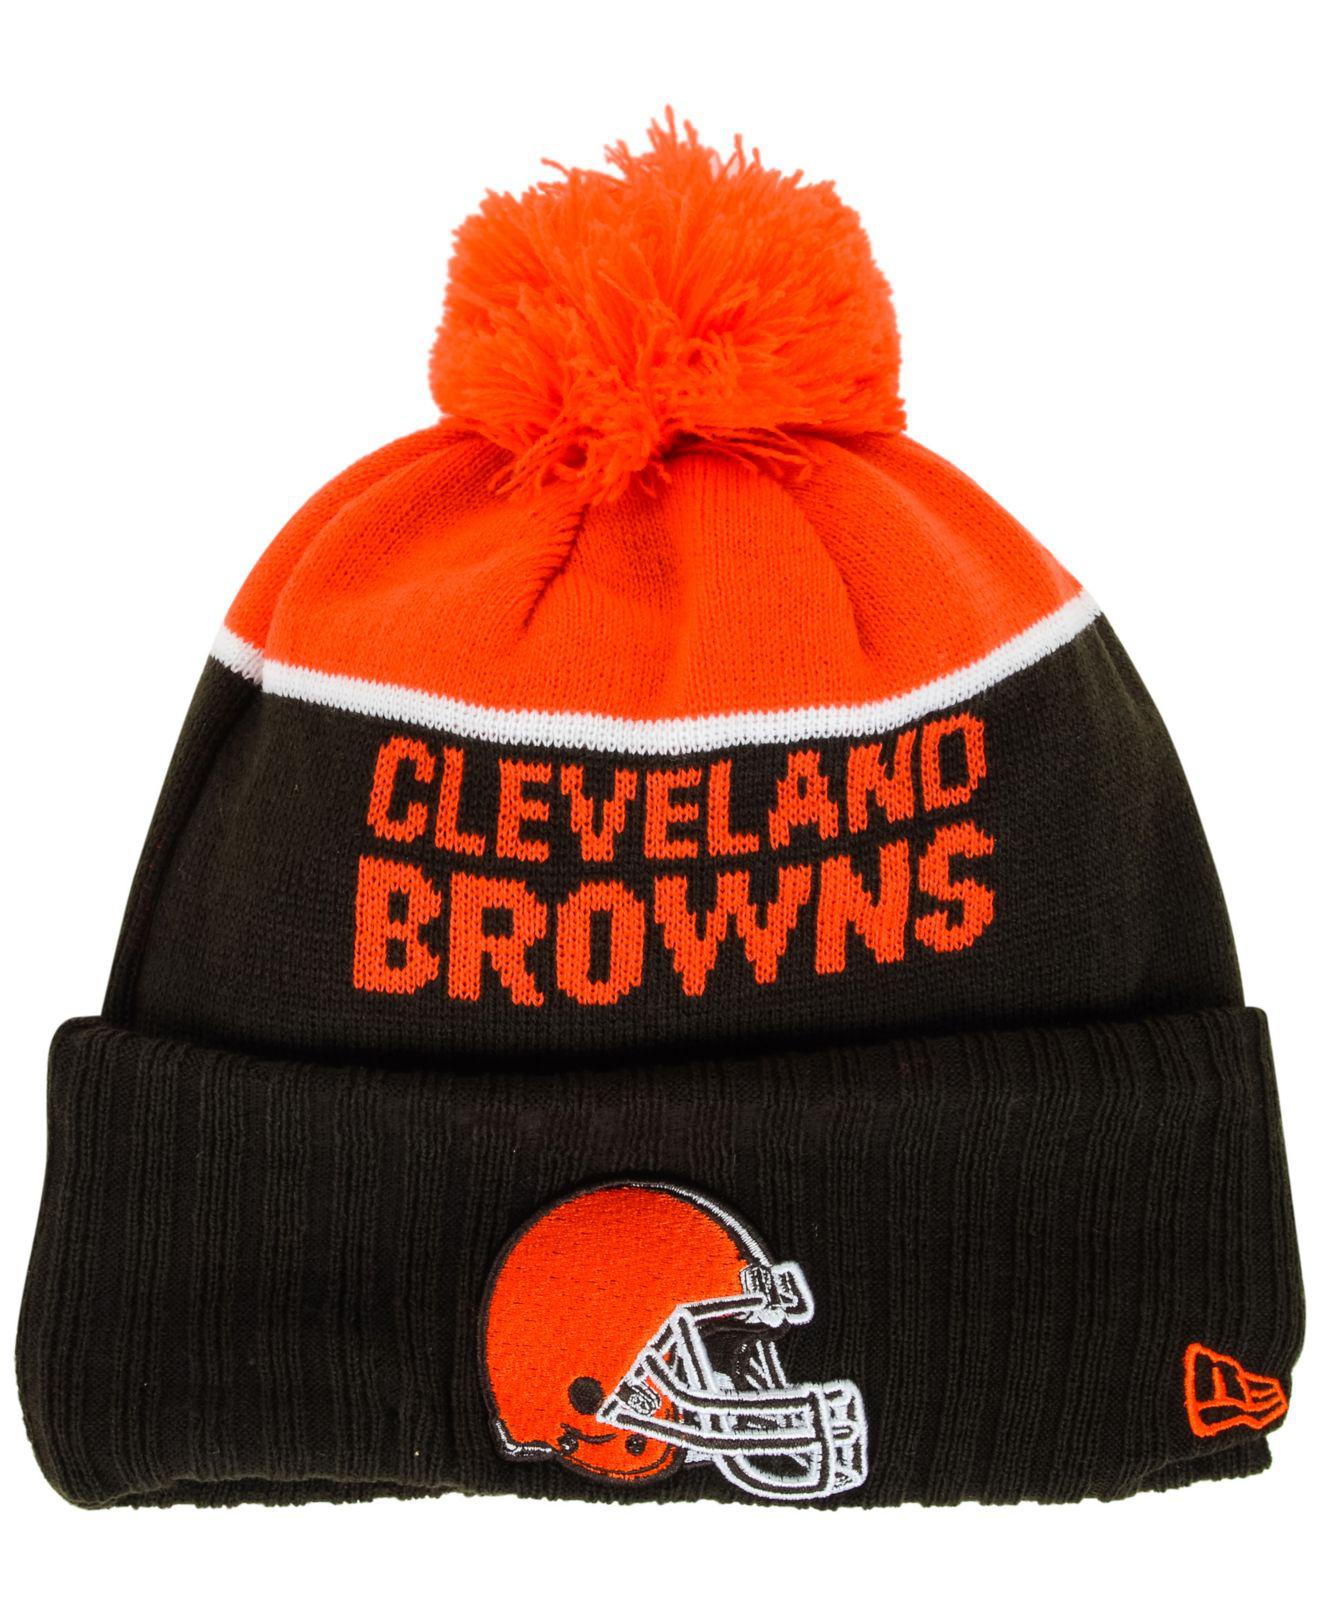 KTZ Synthetic Cleveland Browns Sport Knit Hat in Orange/Brown (Orange) for Men - Lyst